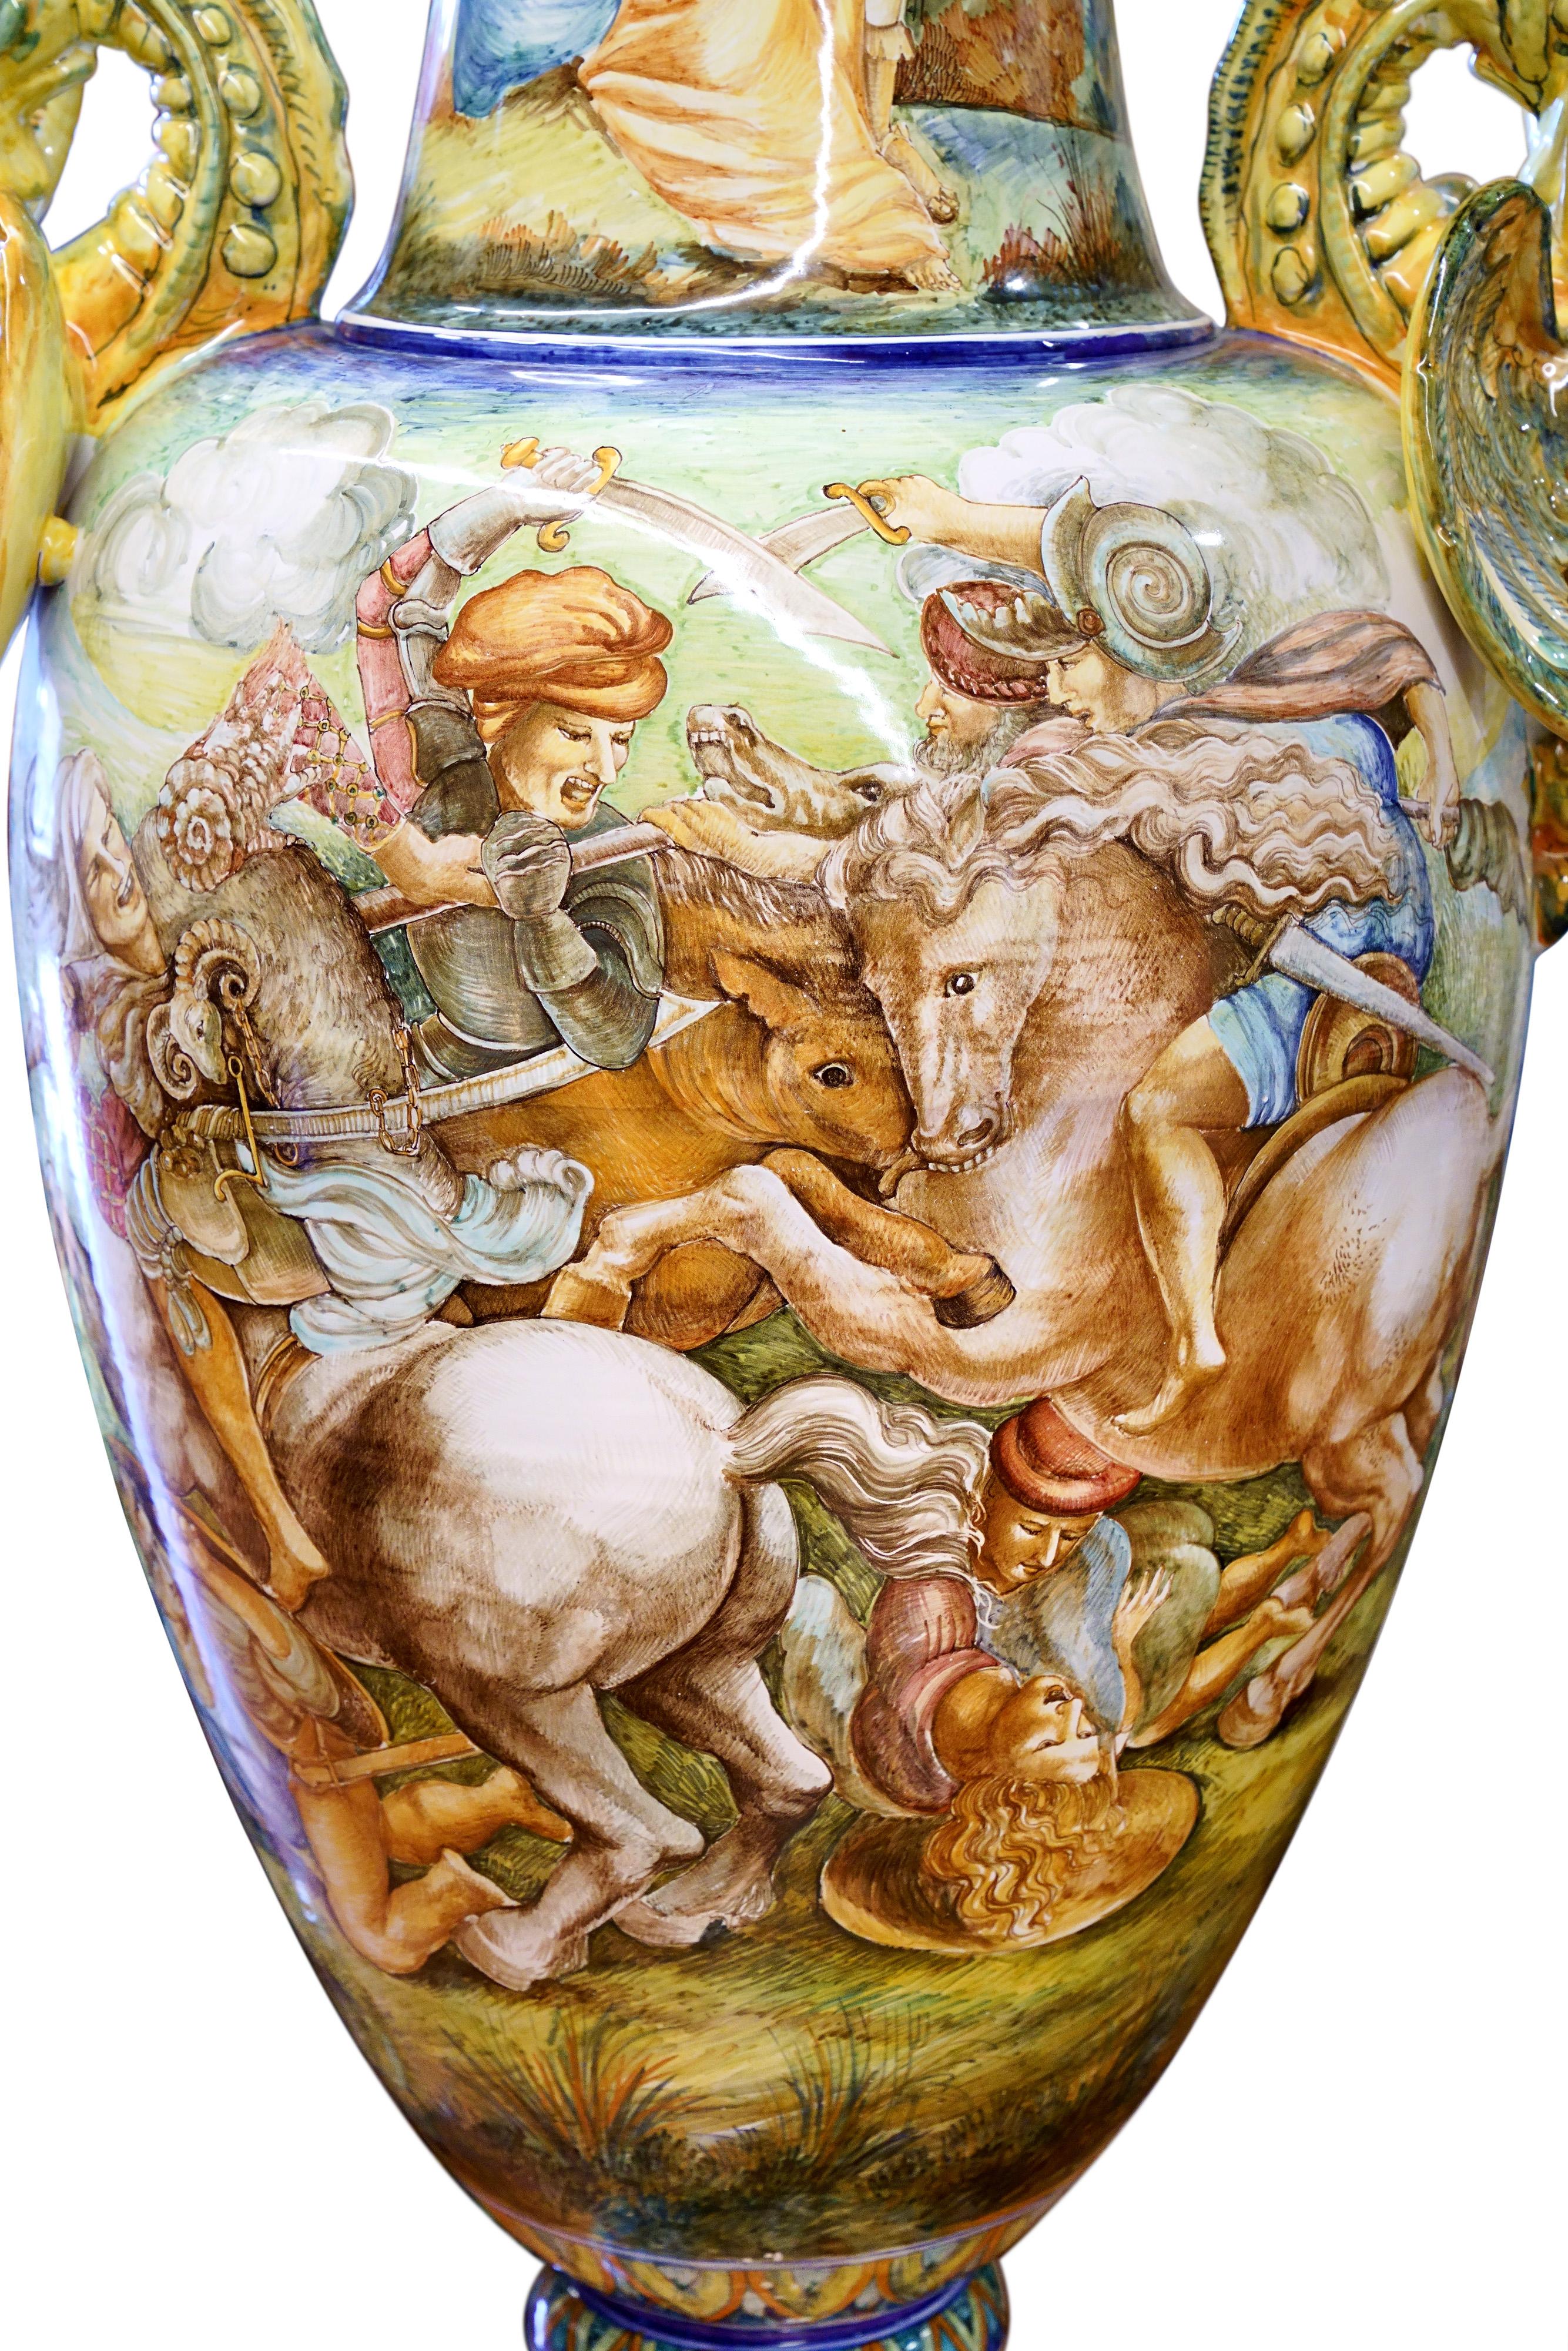 Renaissance Majestic Amphora Vase Majolica Painted Subject Inspired by Leonardo Da Vinci For Sale